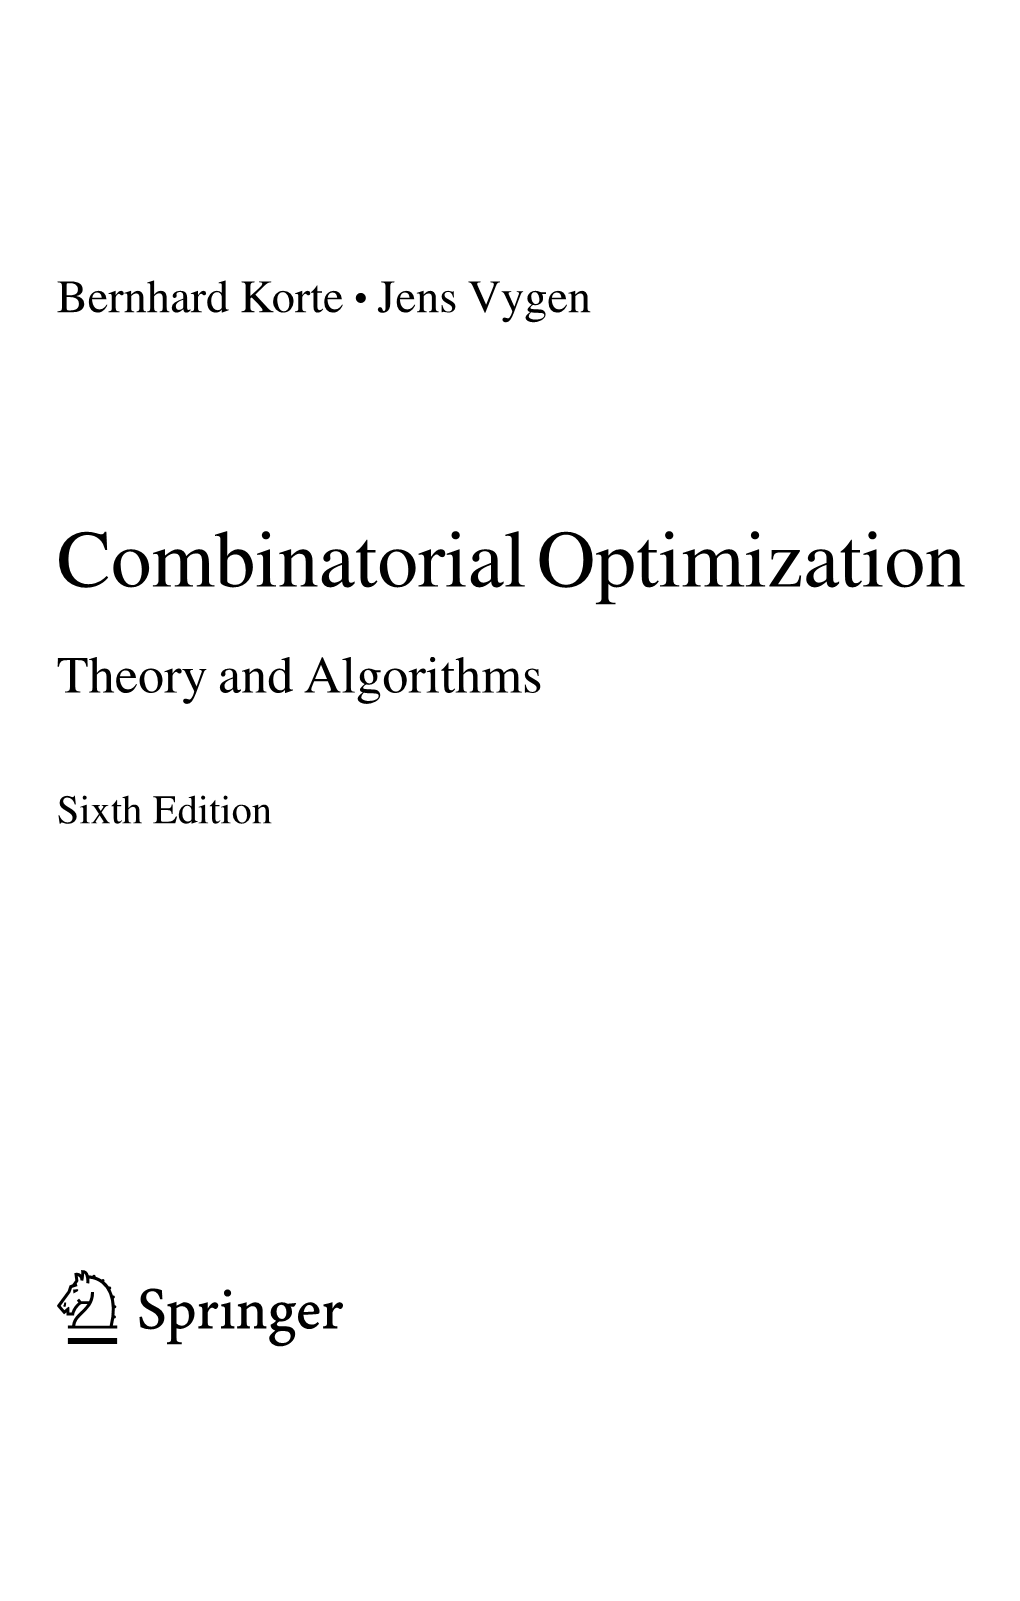 Combinatorialoptimization Theory and Algorithms